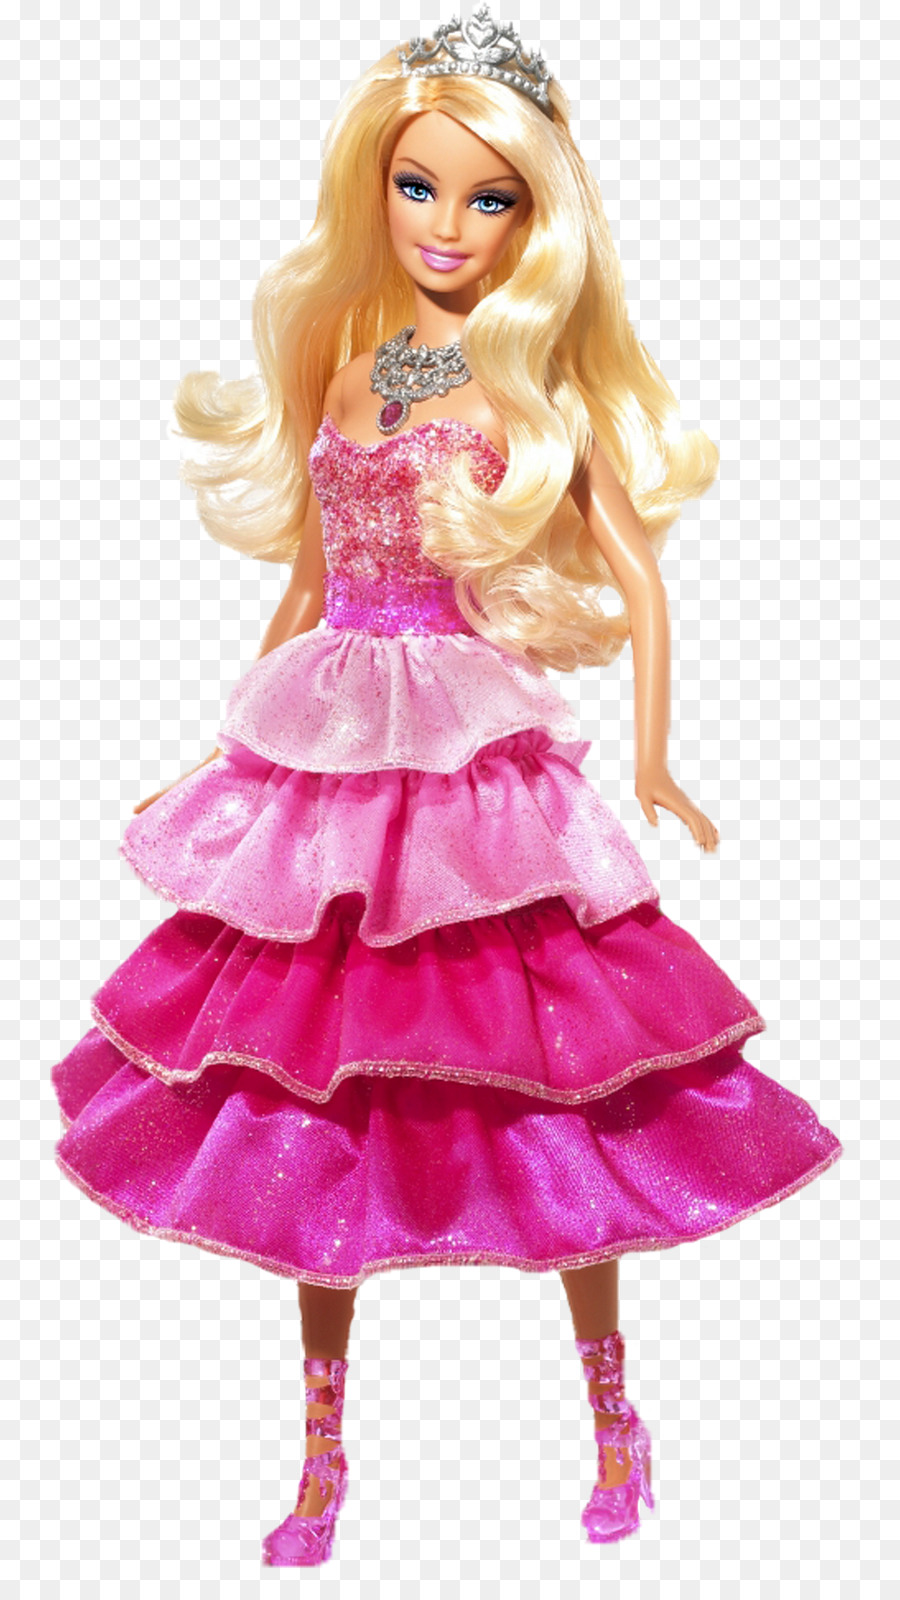 Ruth Handler Barbie Amazon.com Doll Toy - barbie png download - 800*1600 - Free Transparent Ruth Handler png Download.